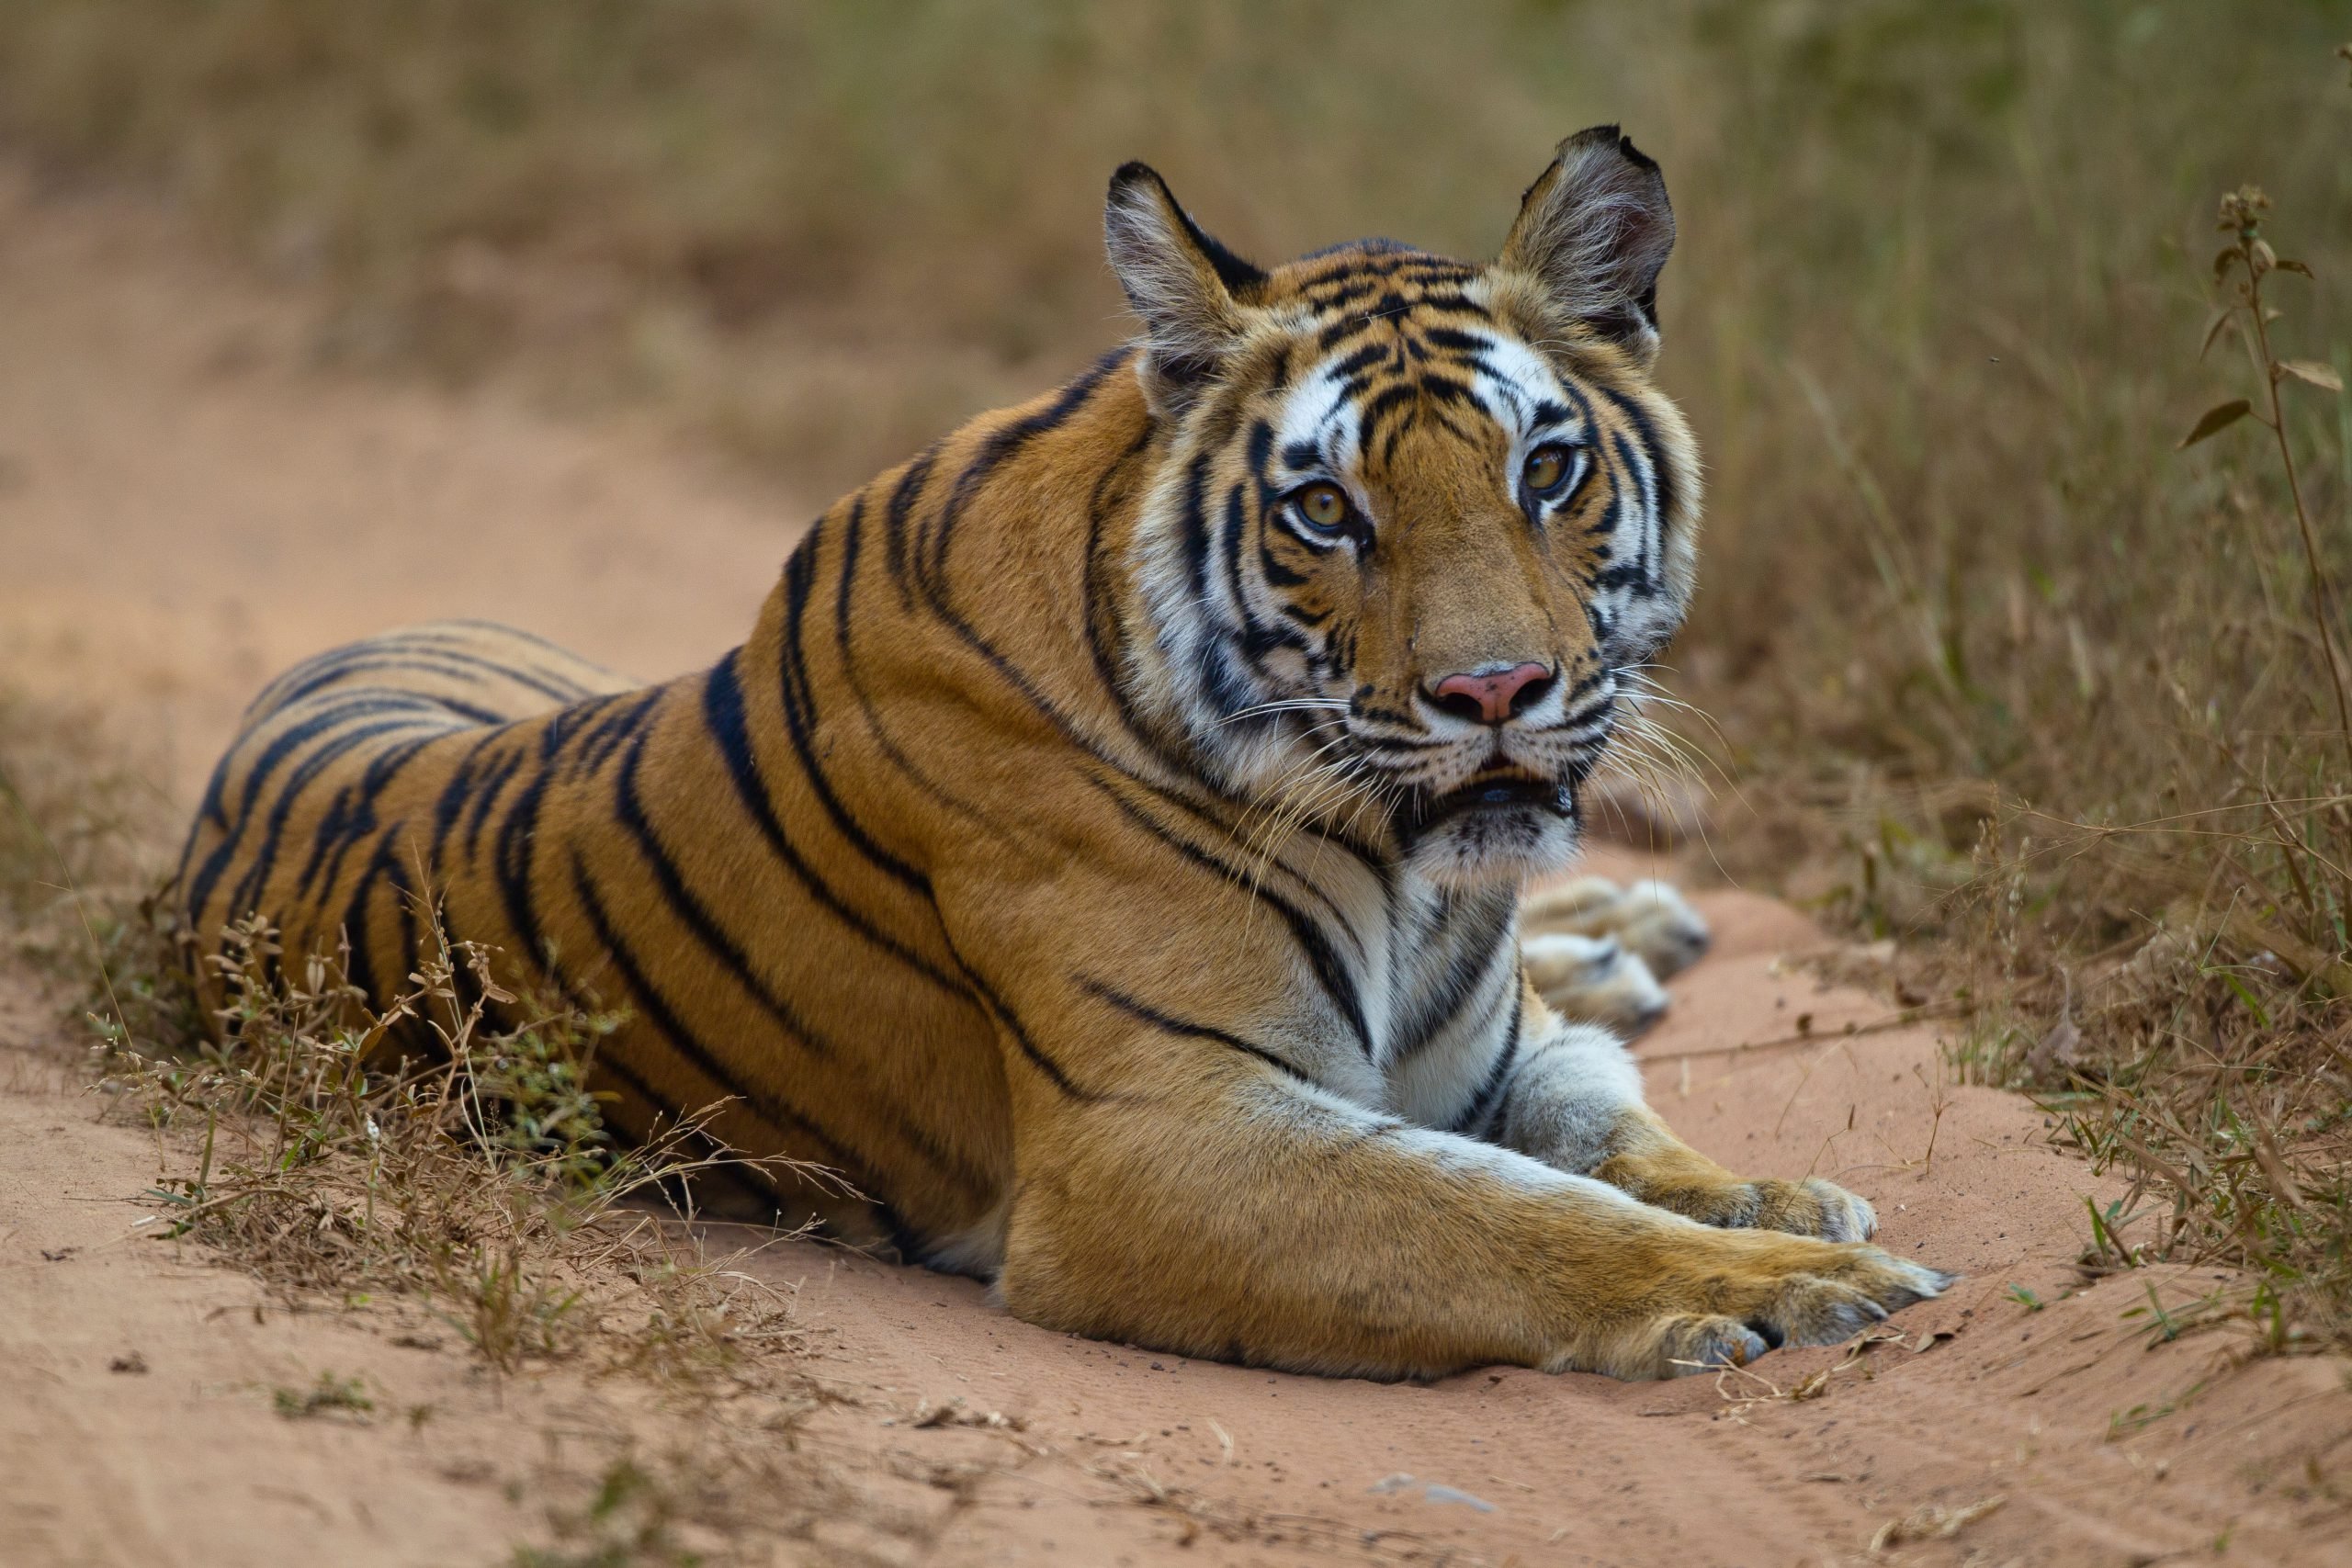 A wild Bengal tiger in Bandhavgarh National Park in Madhya Pradesh [Image by: Mark Smith/Alamy]